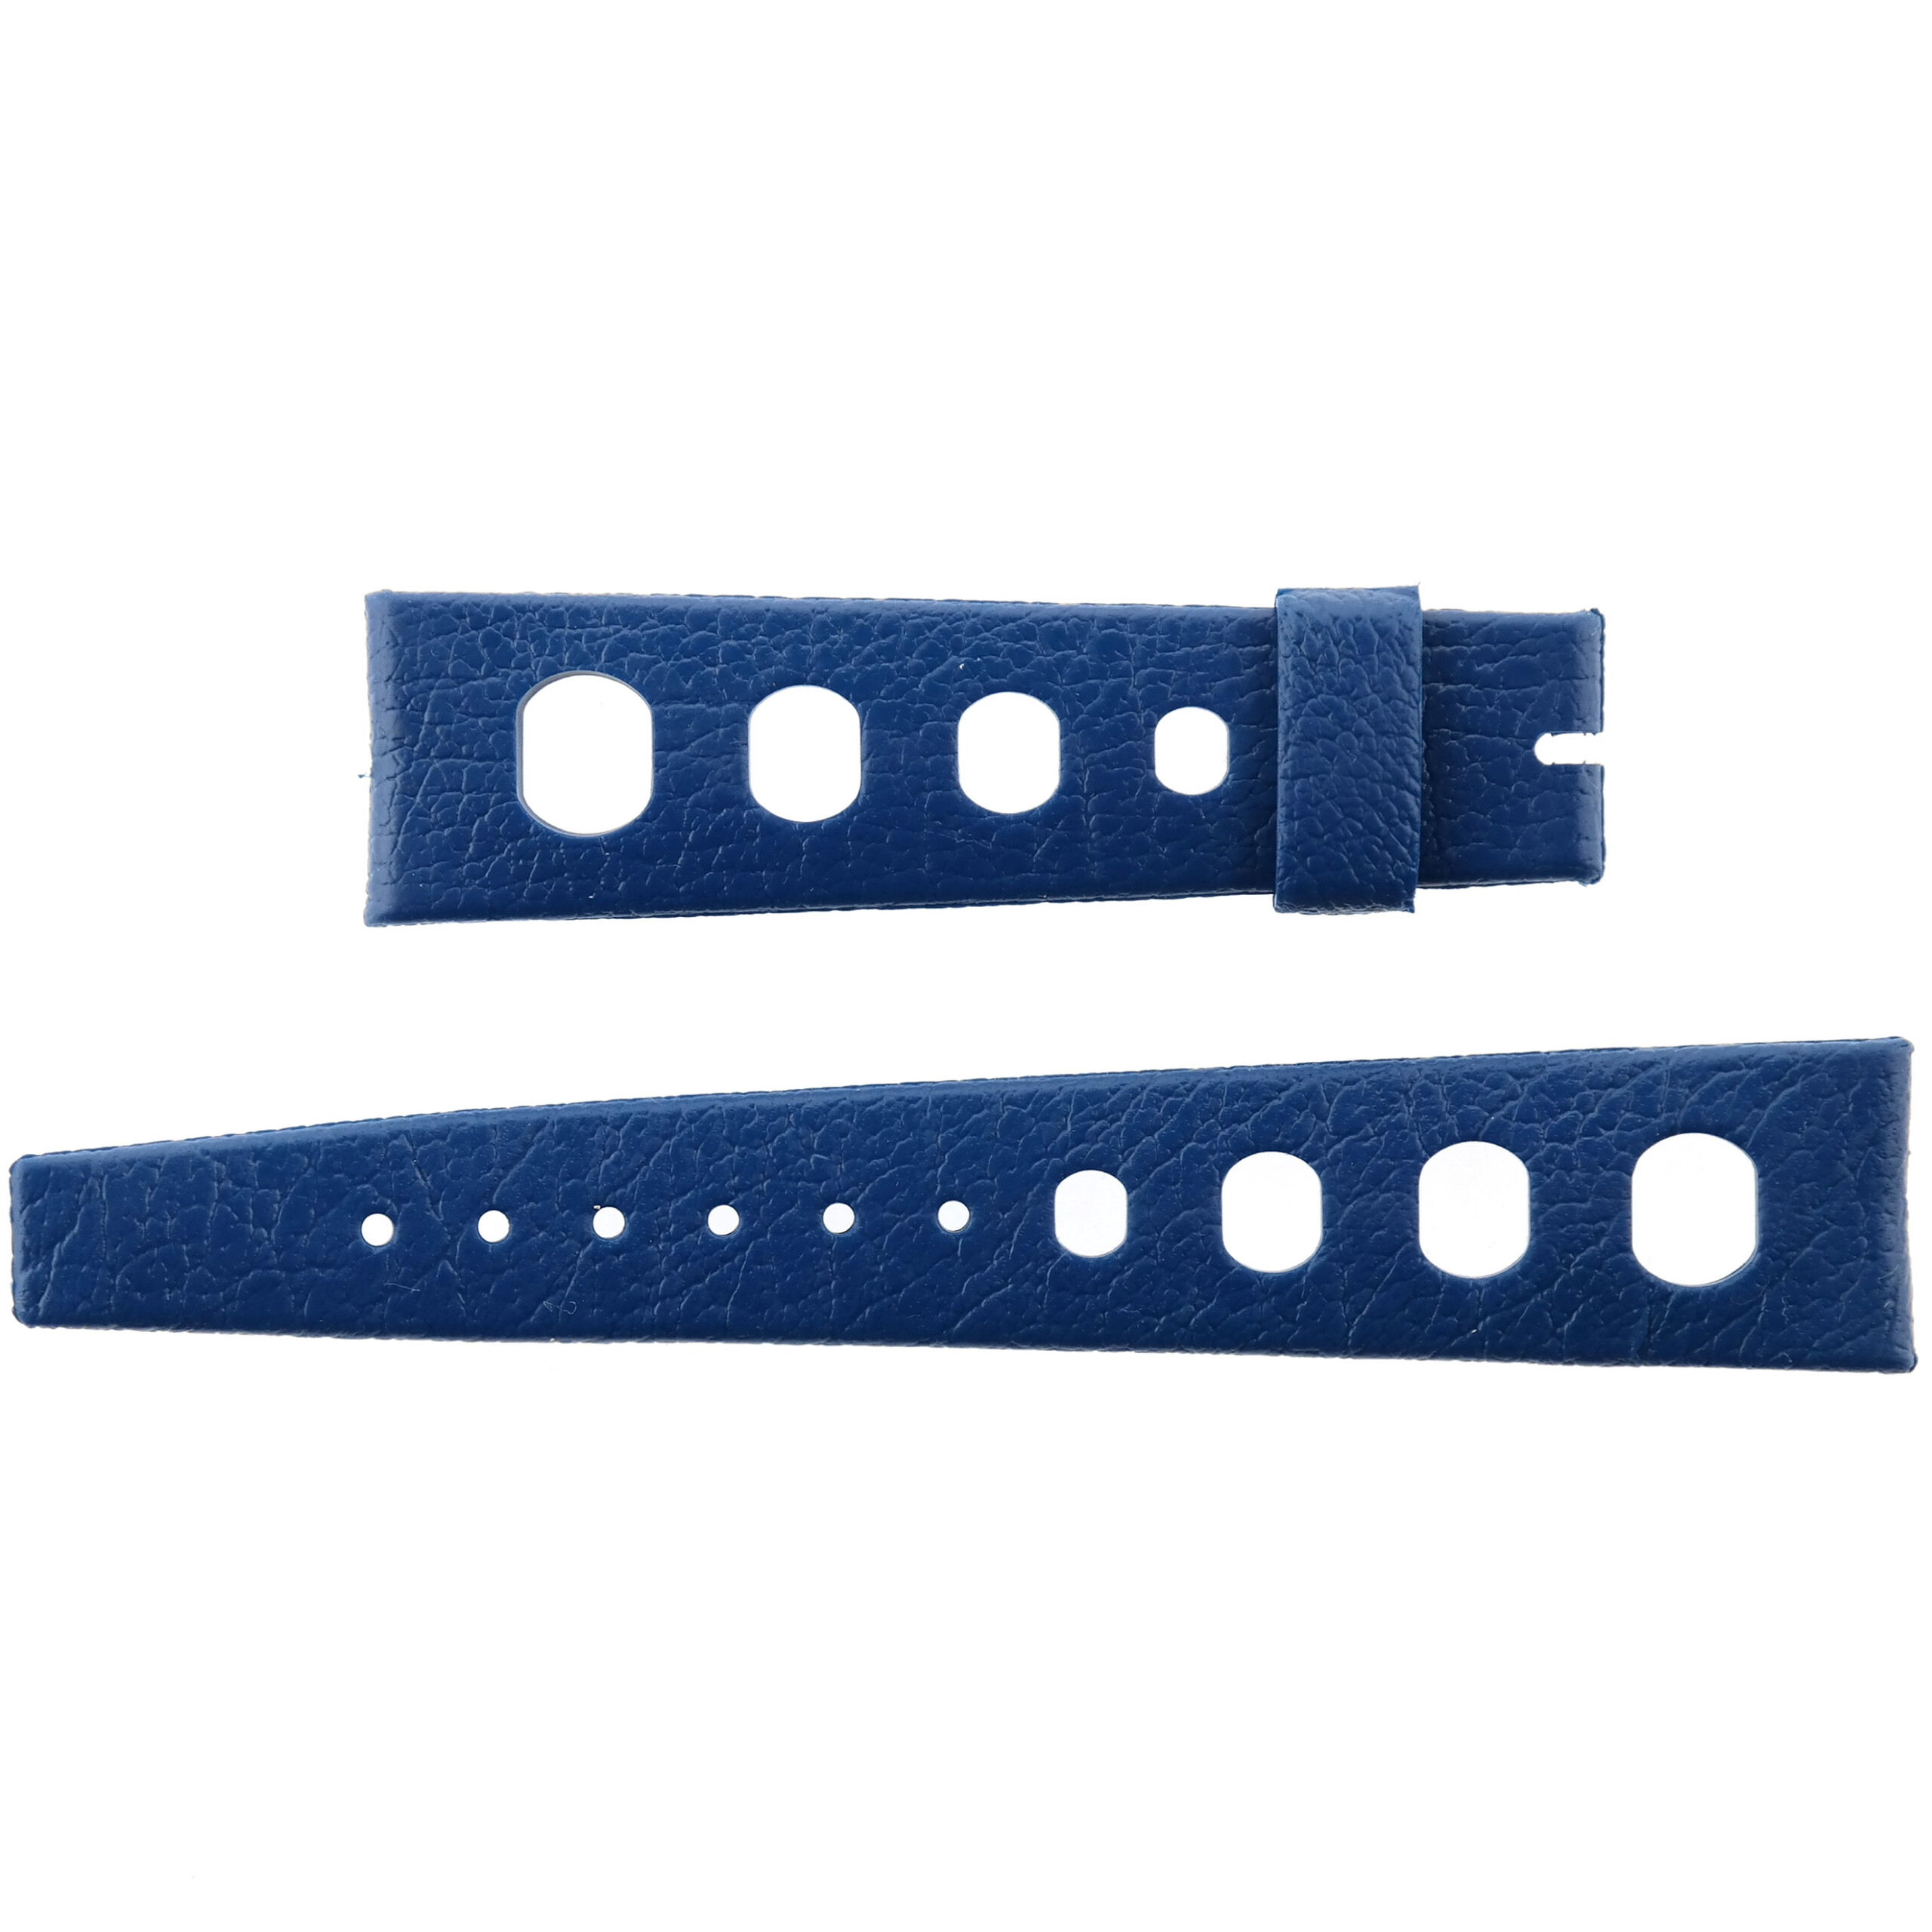 Vintage BESTFIT TROPIC SPORT Watch Strap - 23320 - 20 mm - Blue - Swiss Made